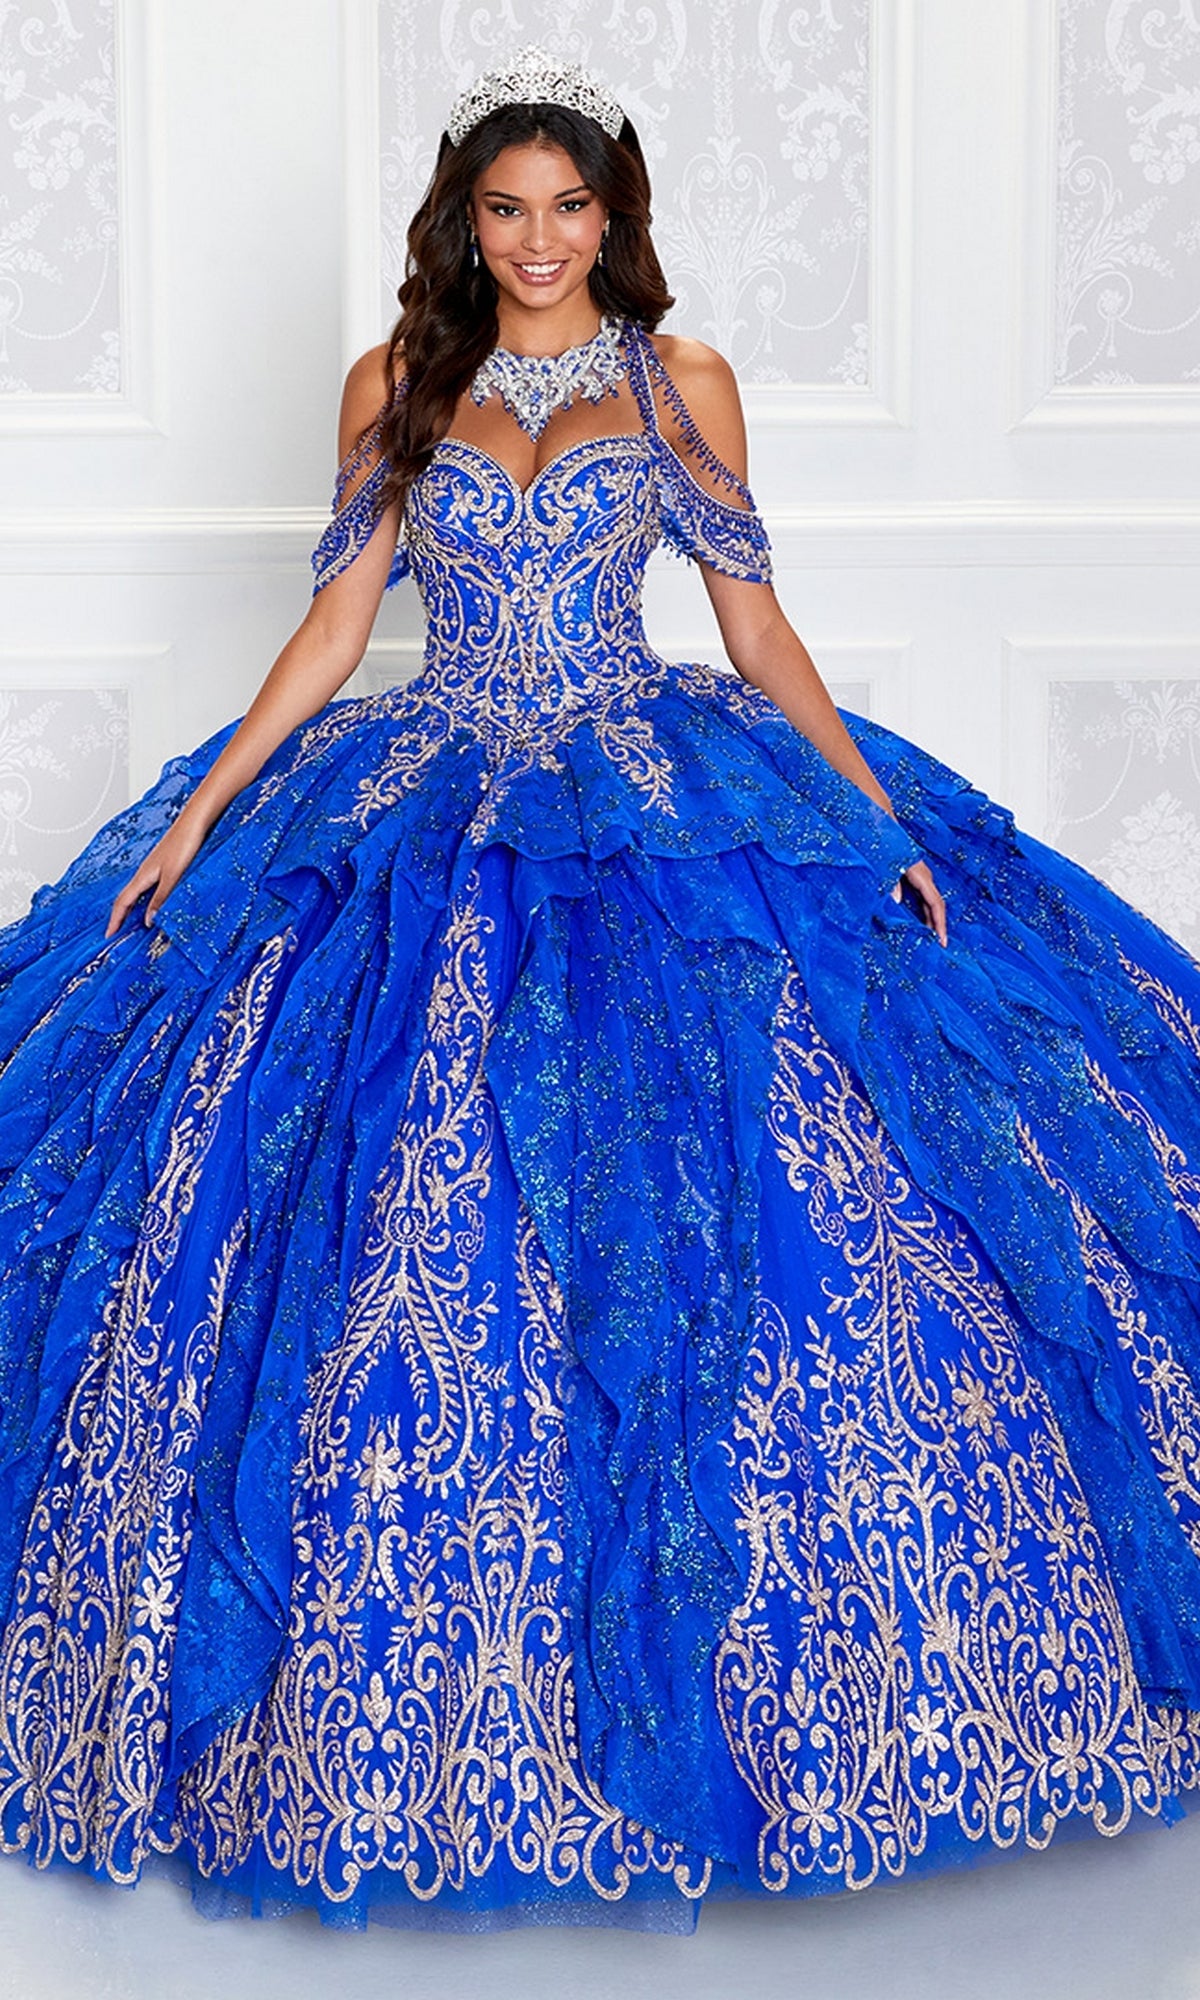 Princesa by Ariana Vara Glitter Quince Dress -PromGirl